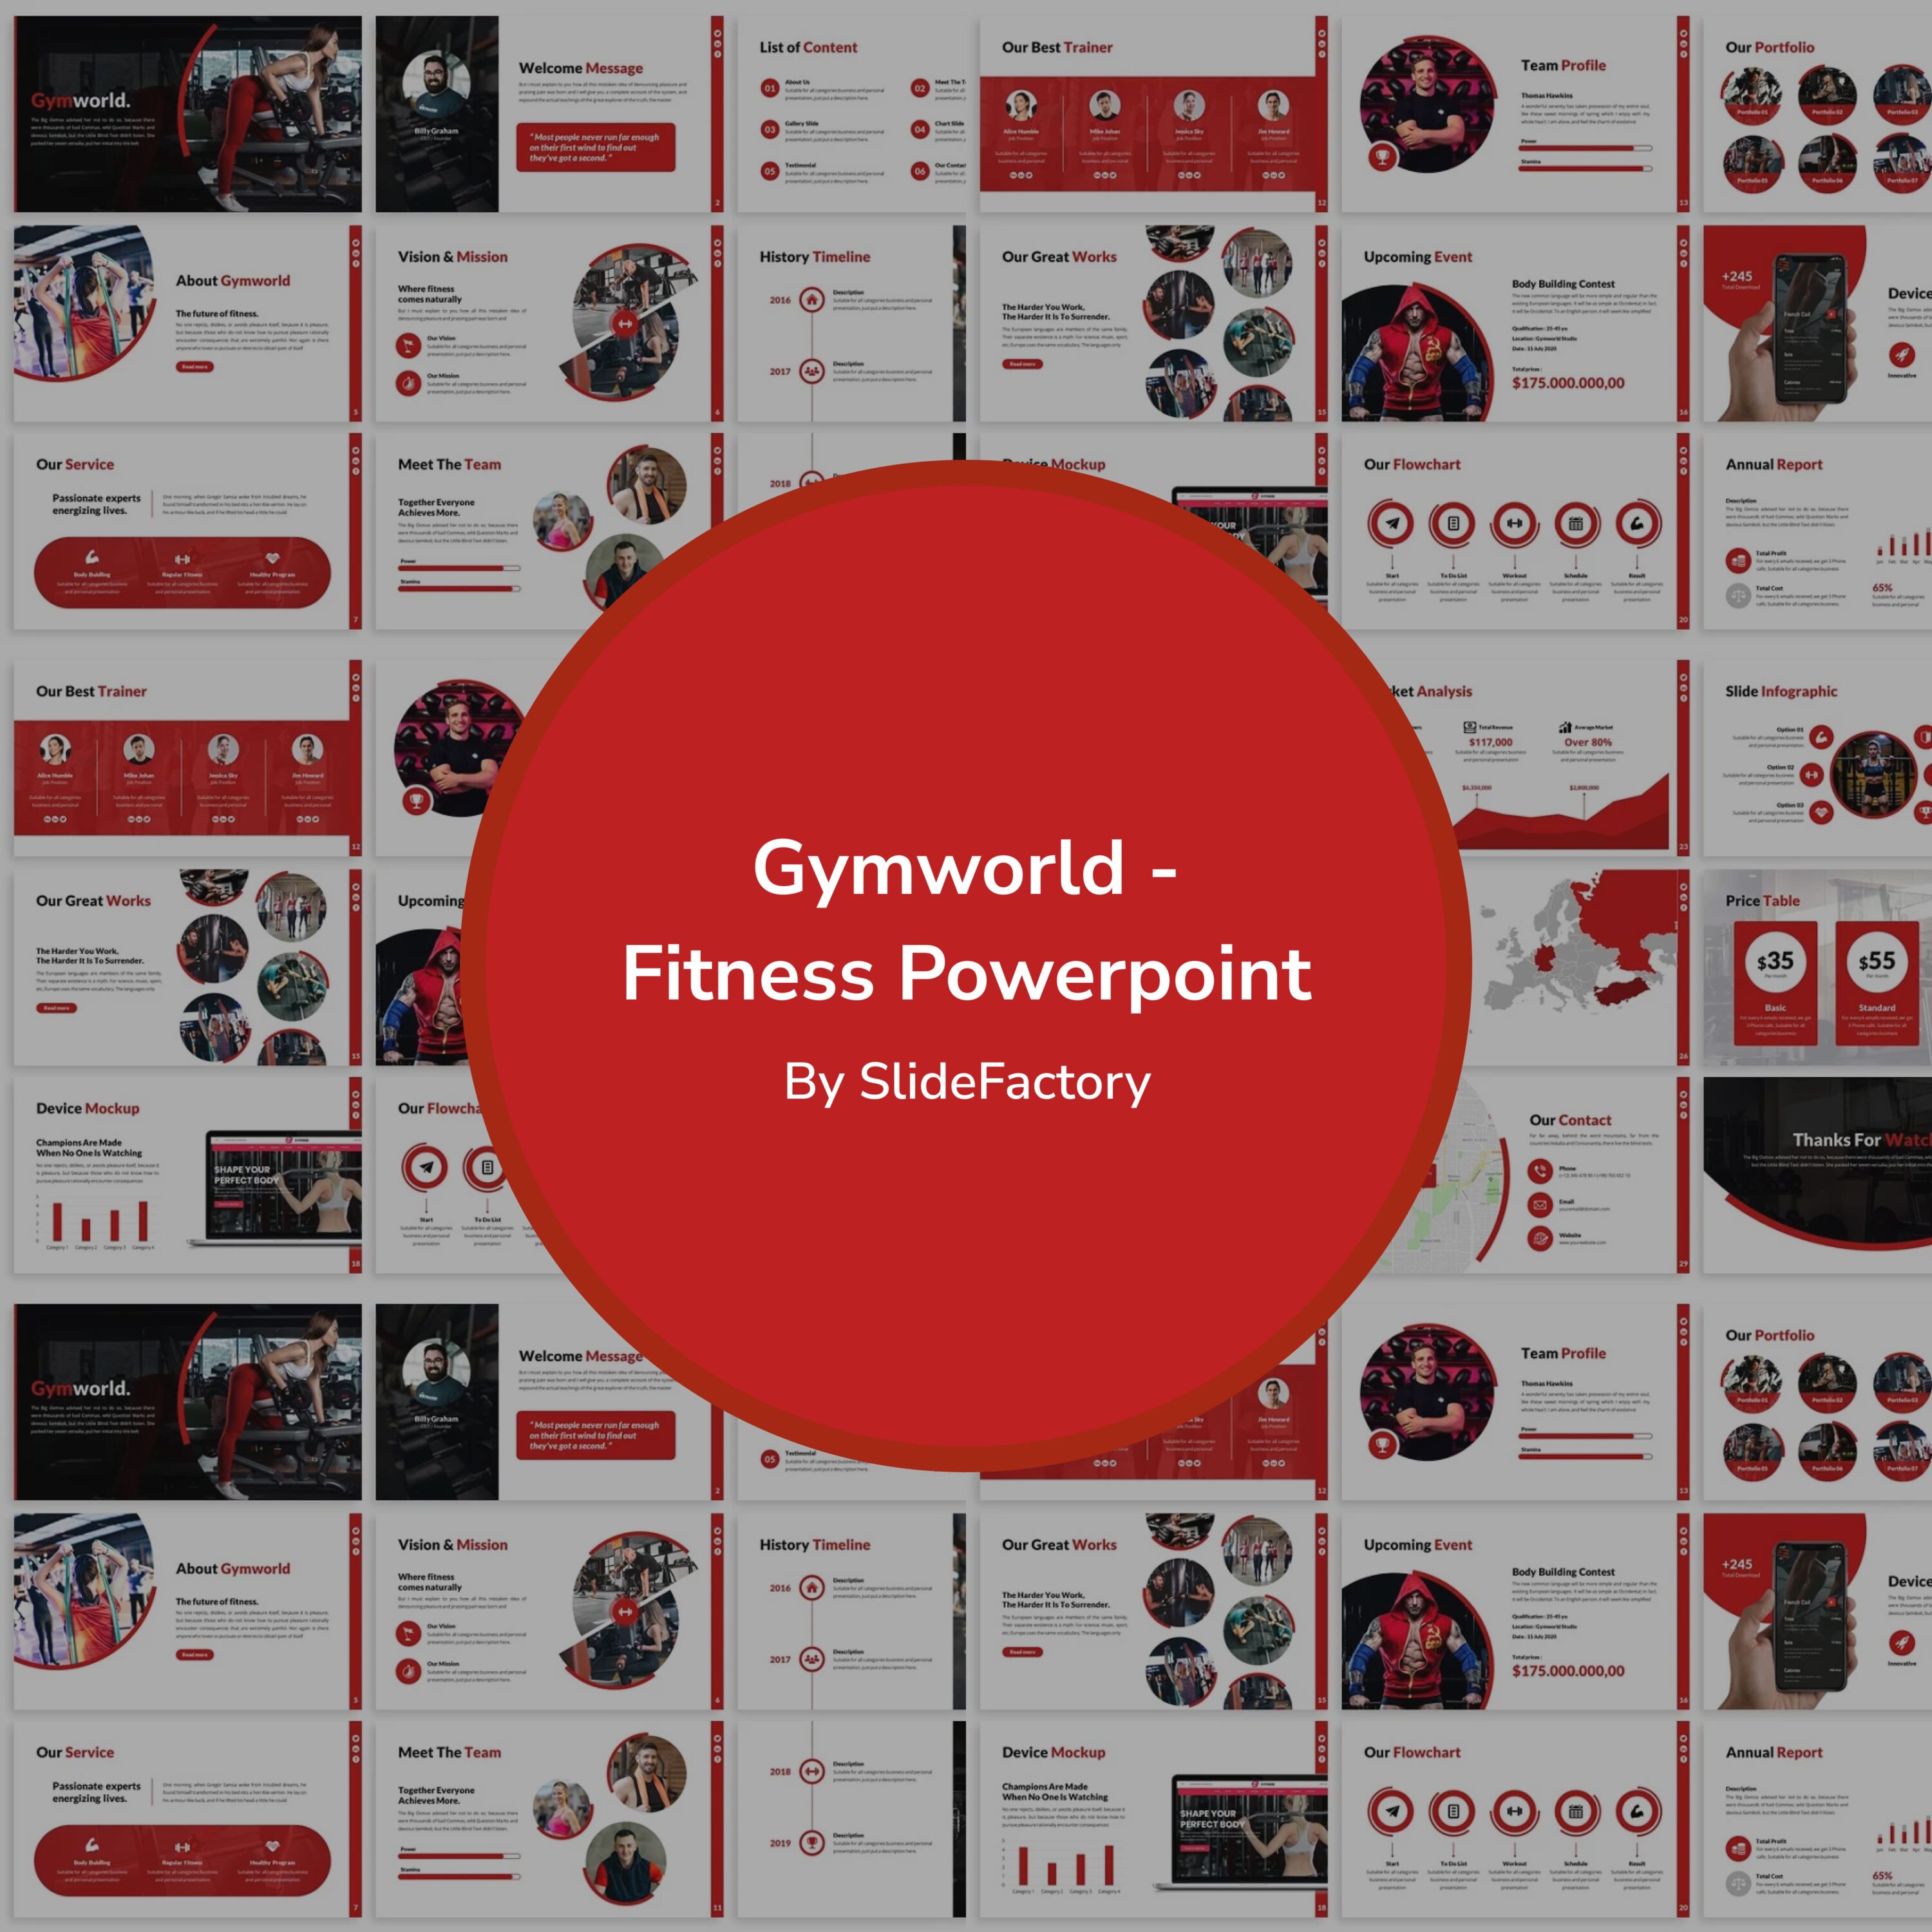 Gymworld - Fitness Powerpoint.